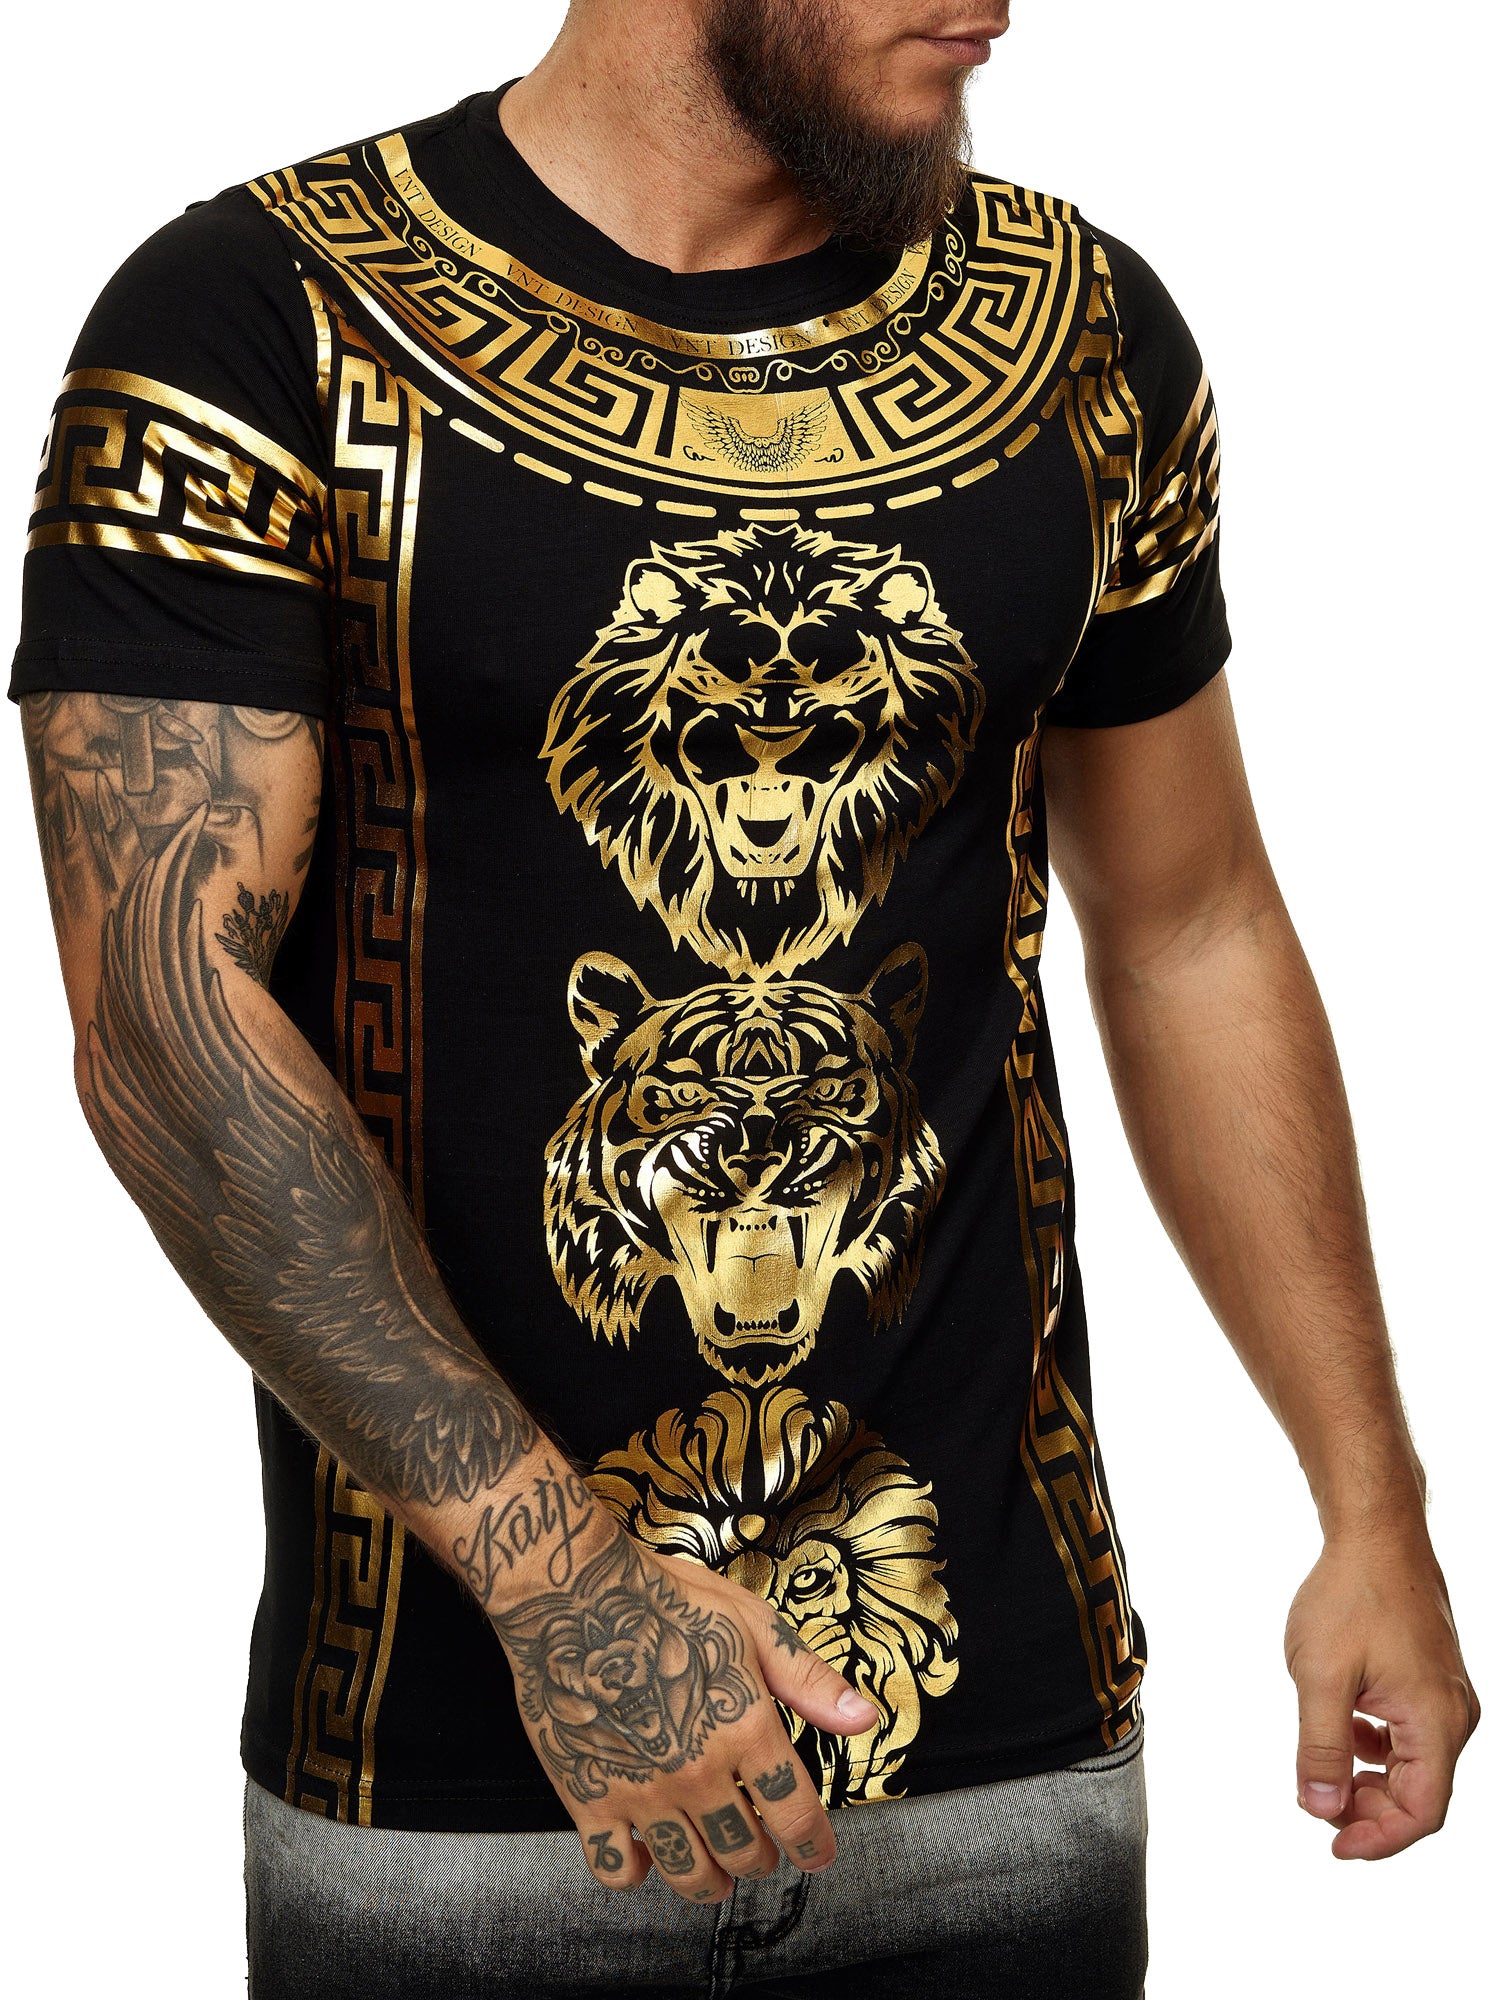 Falion Graphic T-Shirt - Black Gold  X52A